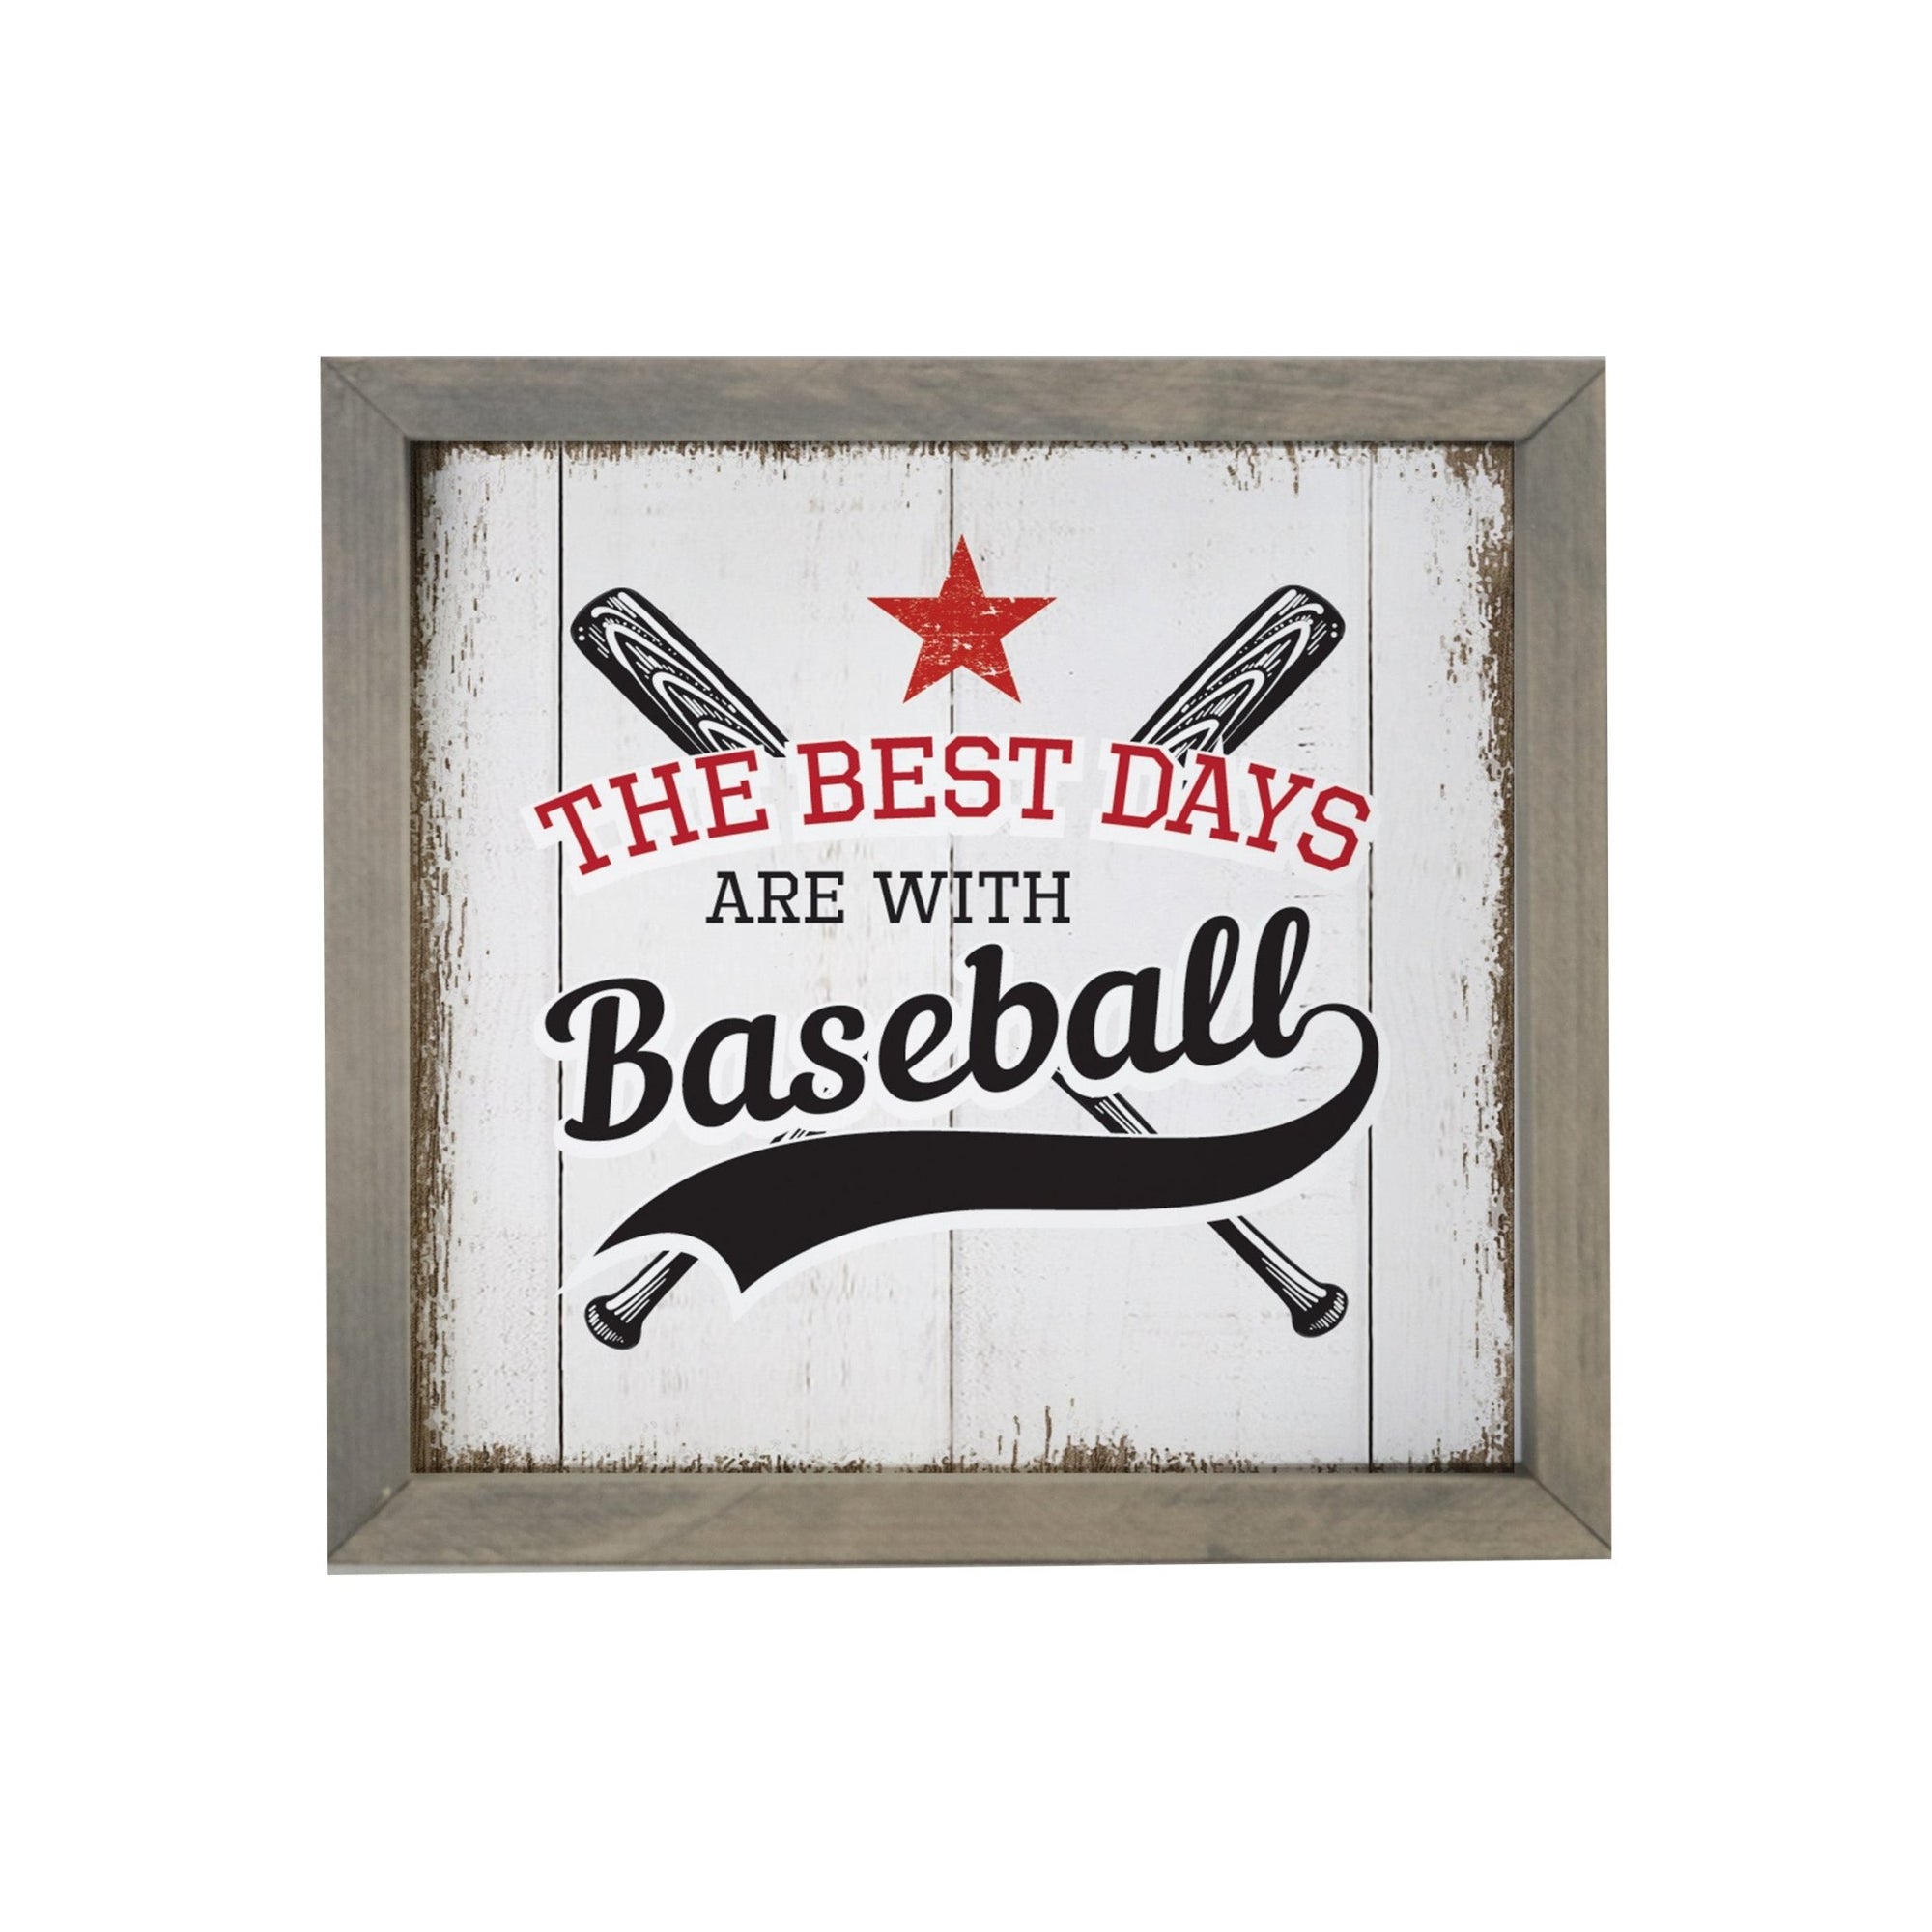 Elegant Baseball Framed Shadow Box Shelf Décor With Inspiring Bible Verses - The Best Days - LifeSong Milestones